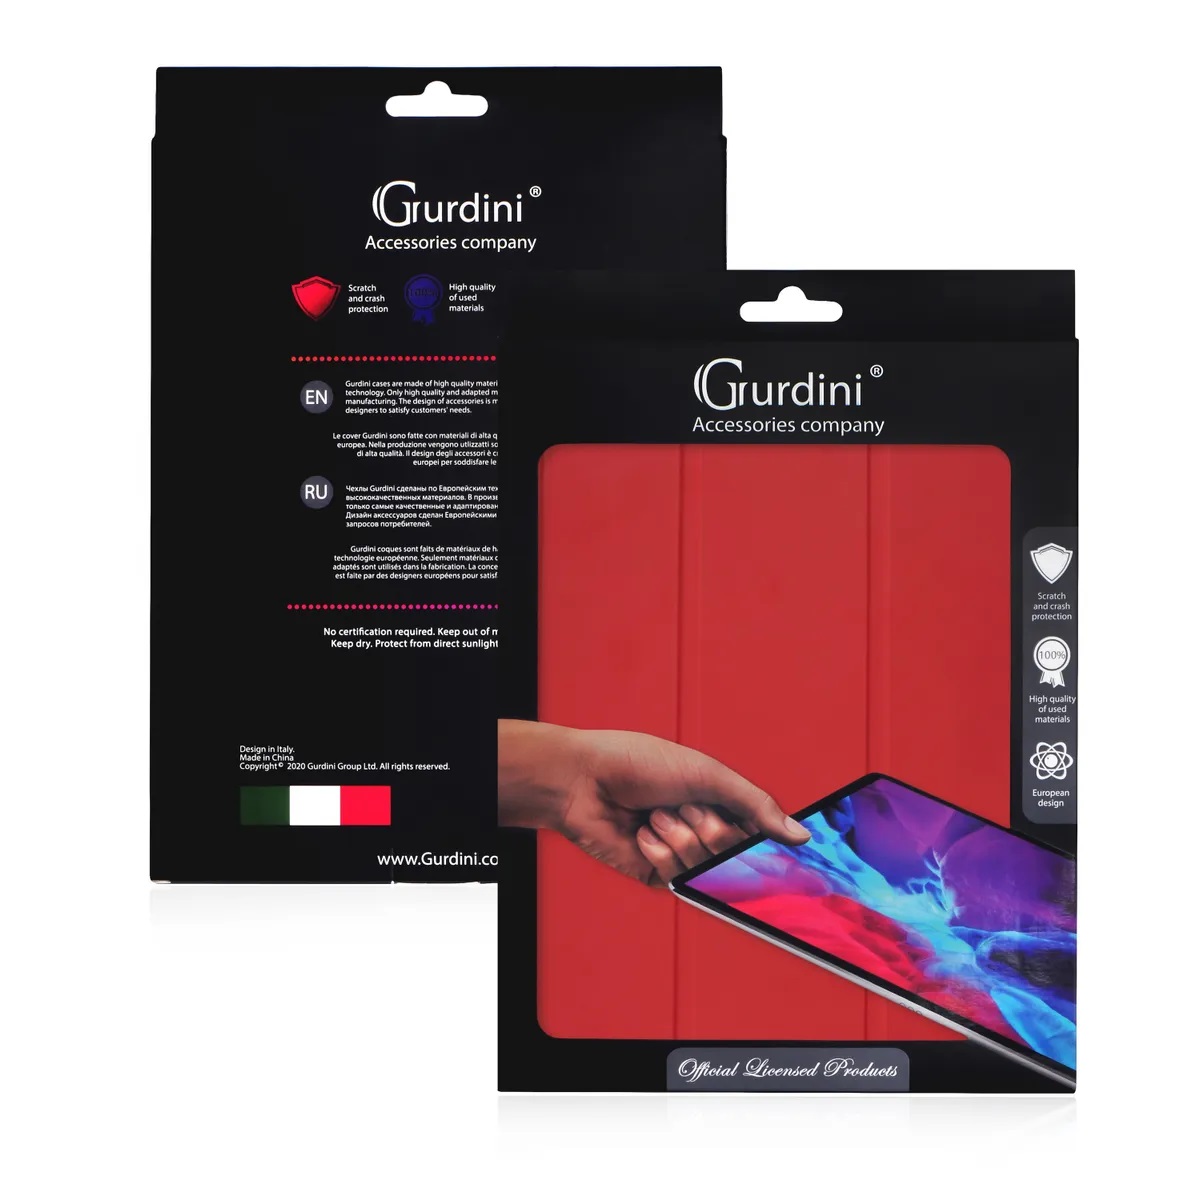 Чехол-книжка Gurdini Milano Series (pen slot) для iPad Pro 11 Red